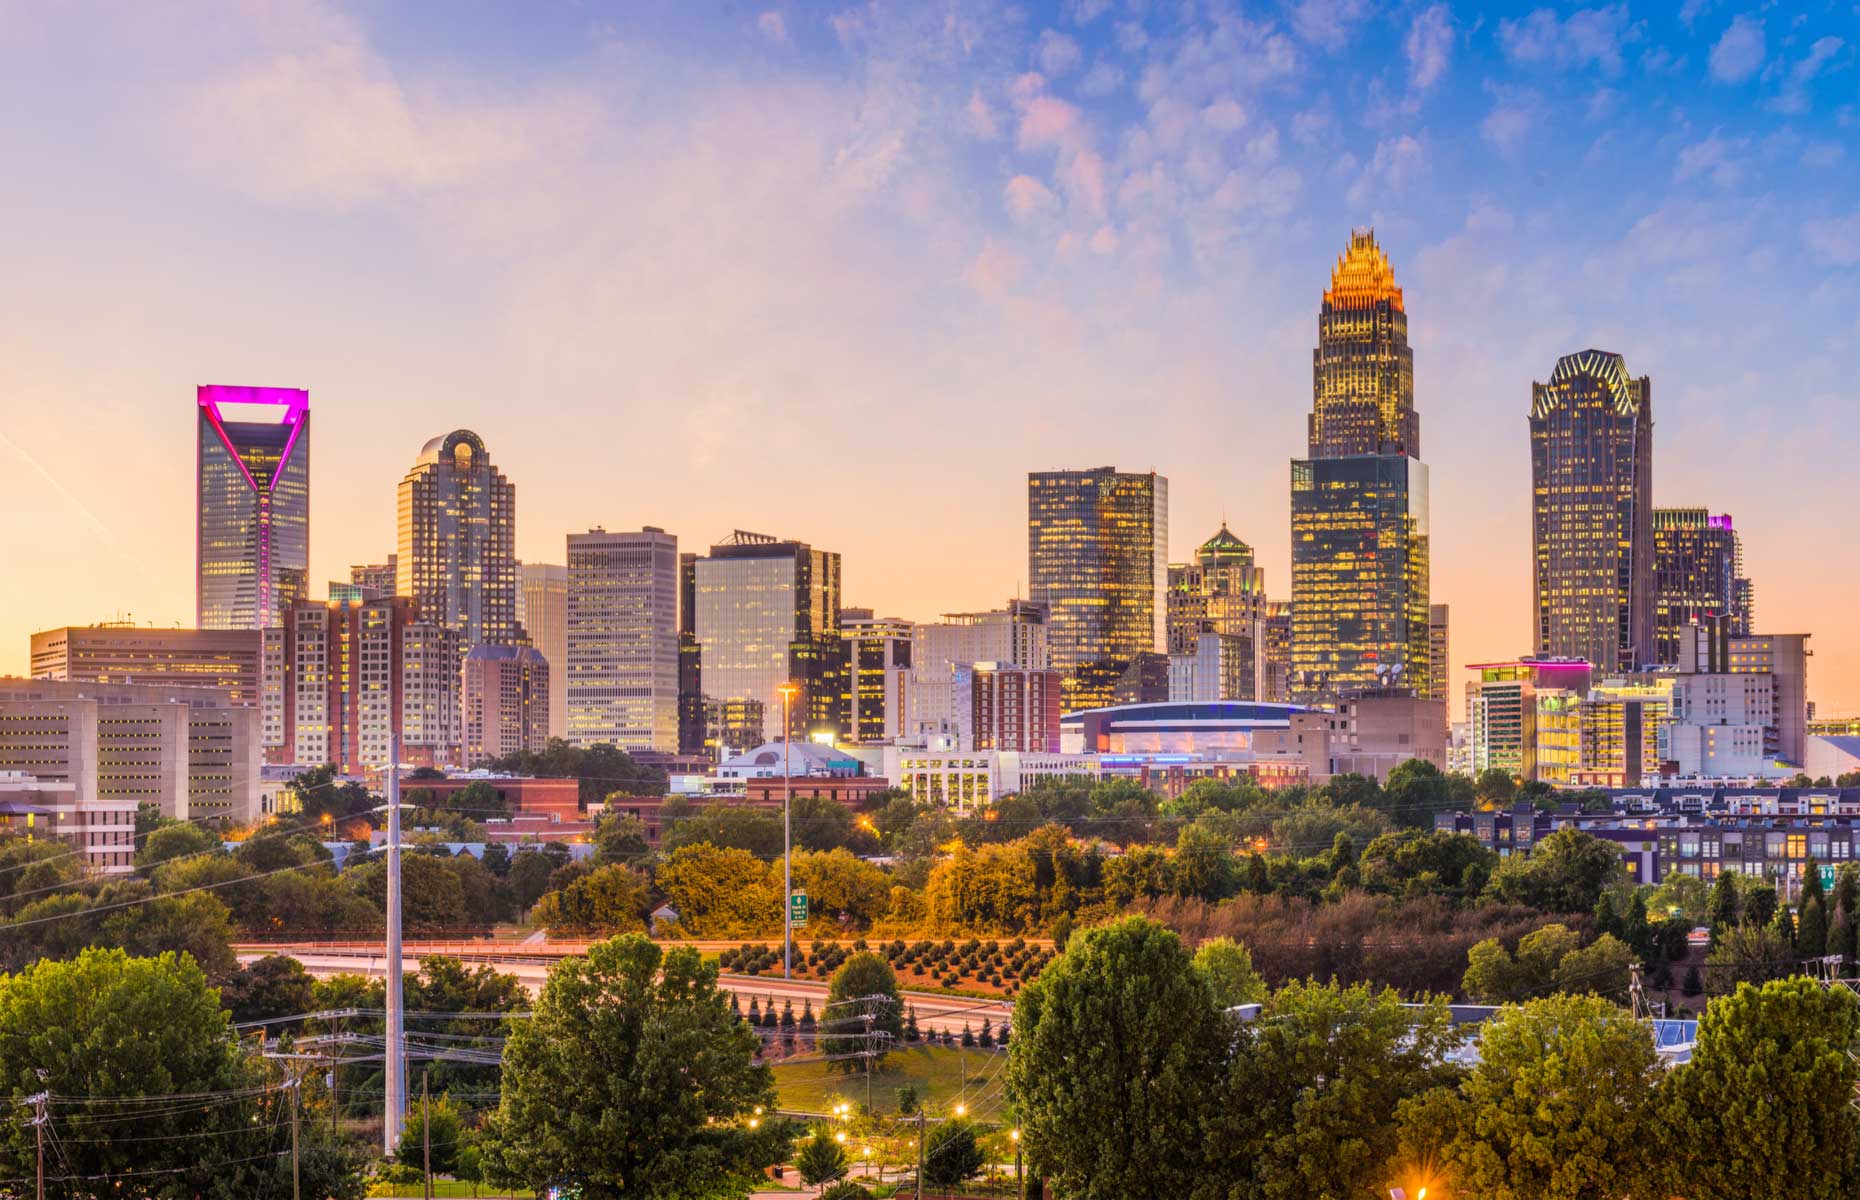 View of Uptown Charlotte in North Carolina (Image: Sean Pavone/Shutterstock)